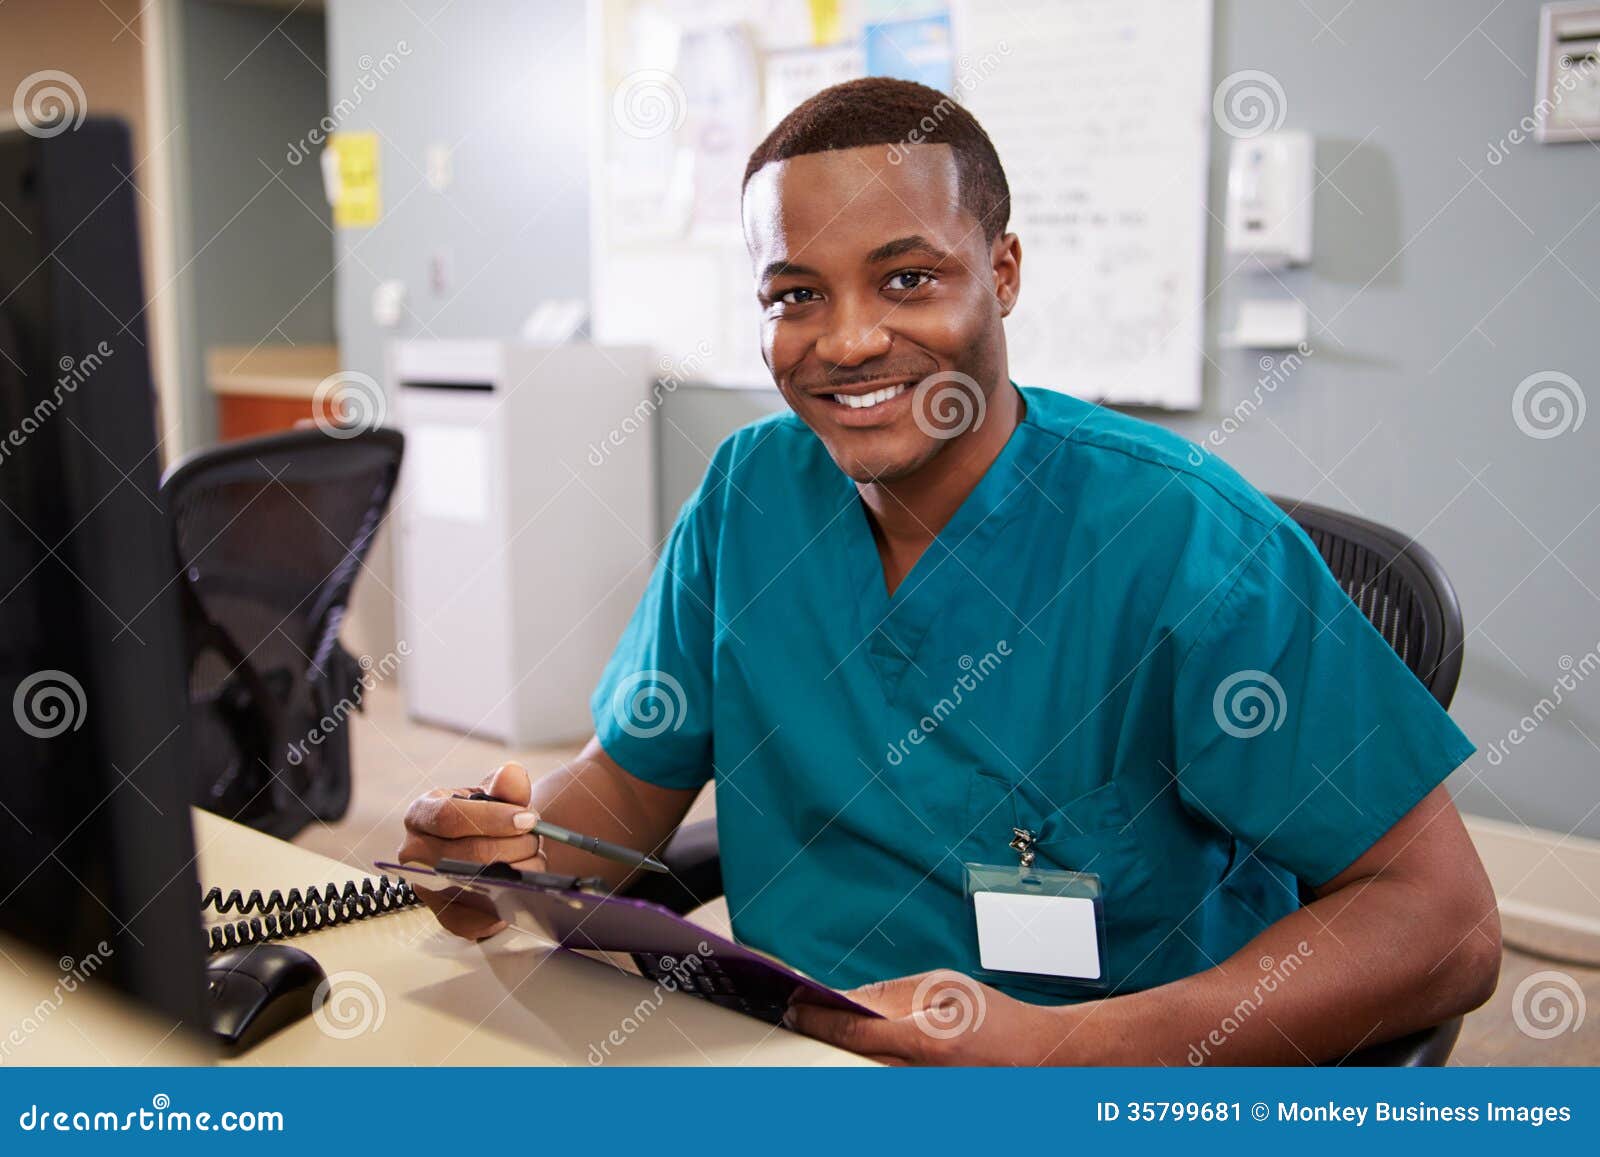 portrait of male nurse working at nurses station